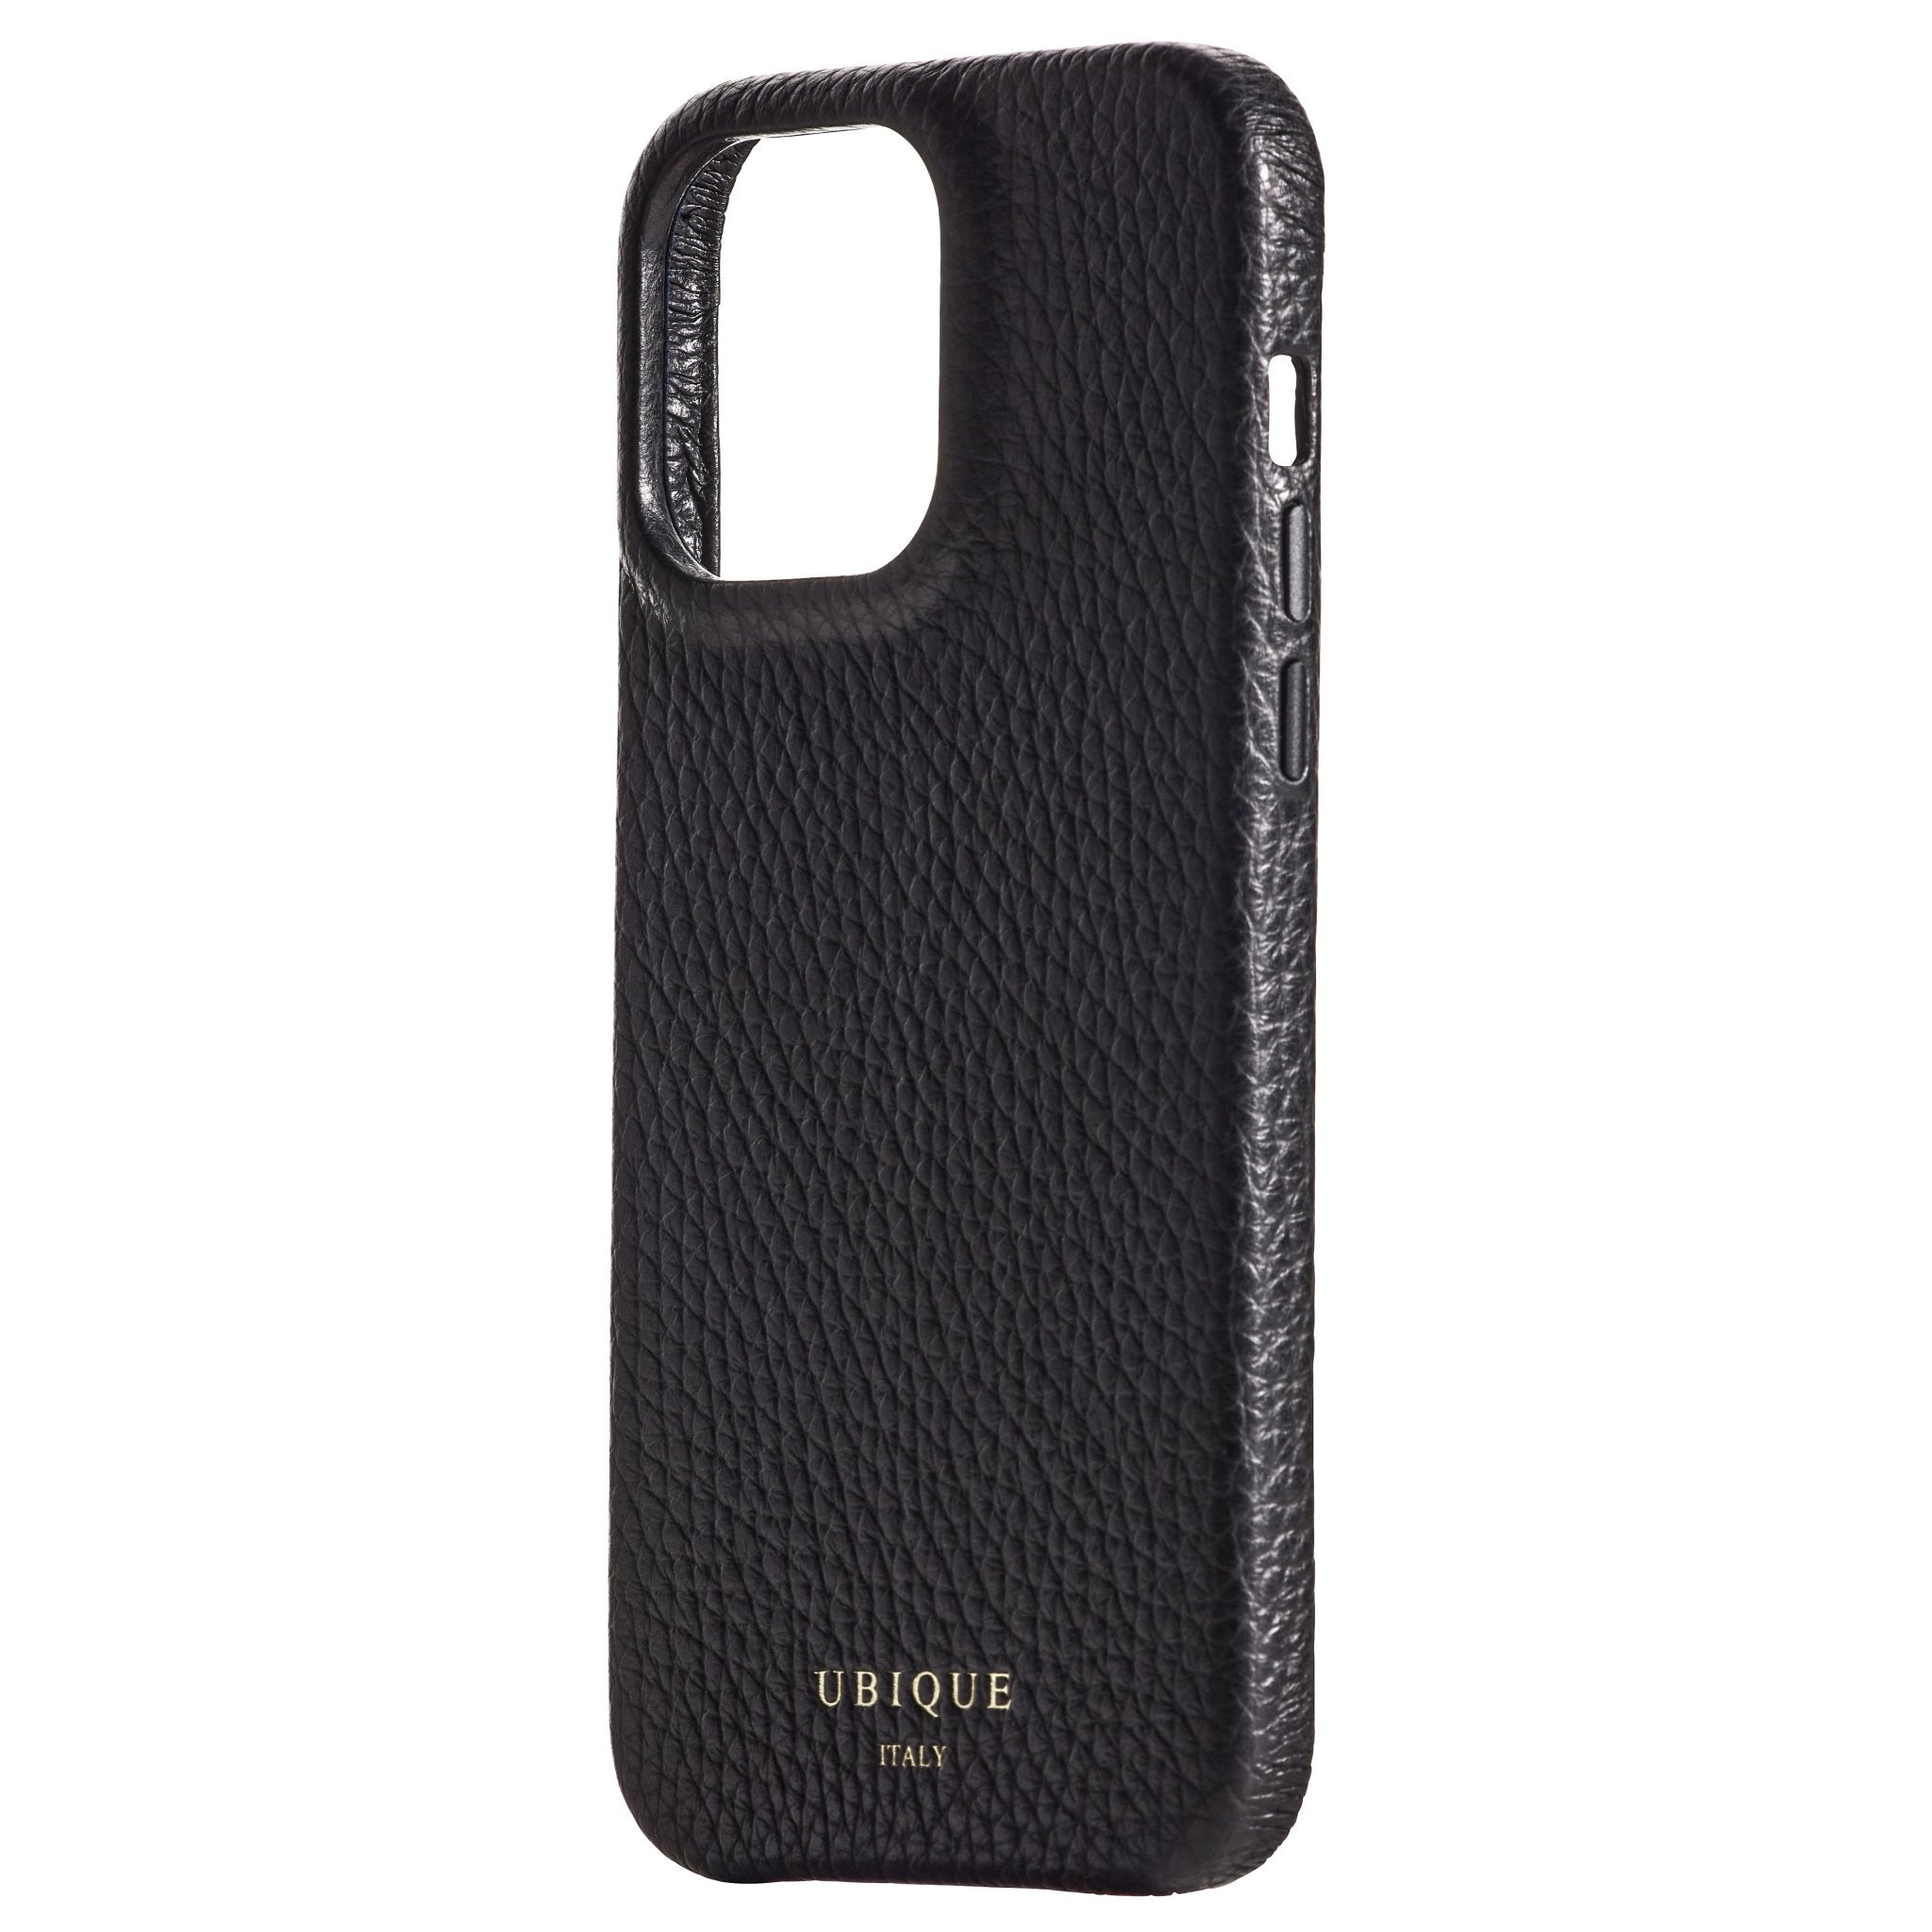 Ubique Italy Luxury iPhone Case 14 Pro Max Pebble Grain Leather Classic Black Angled